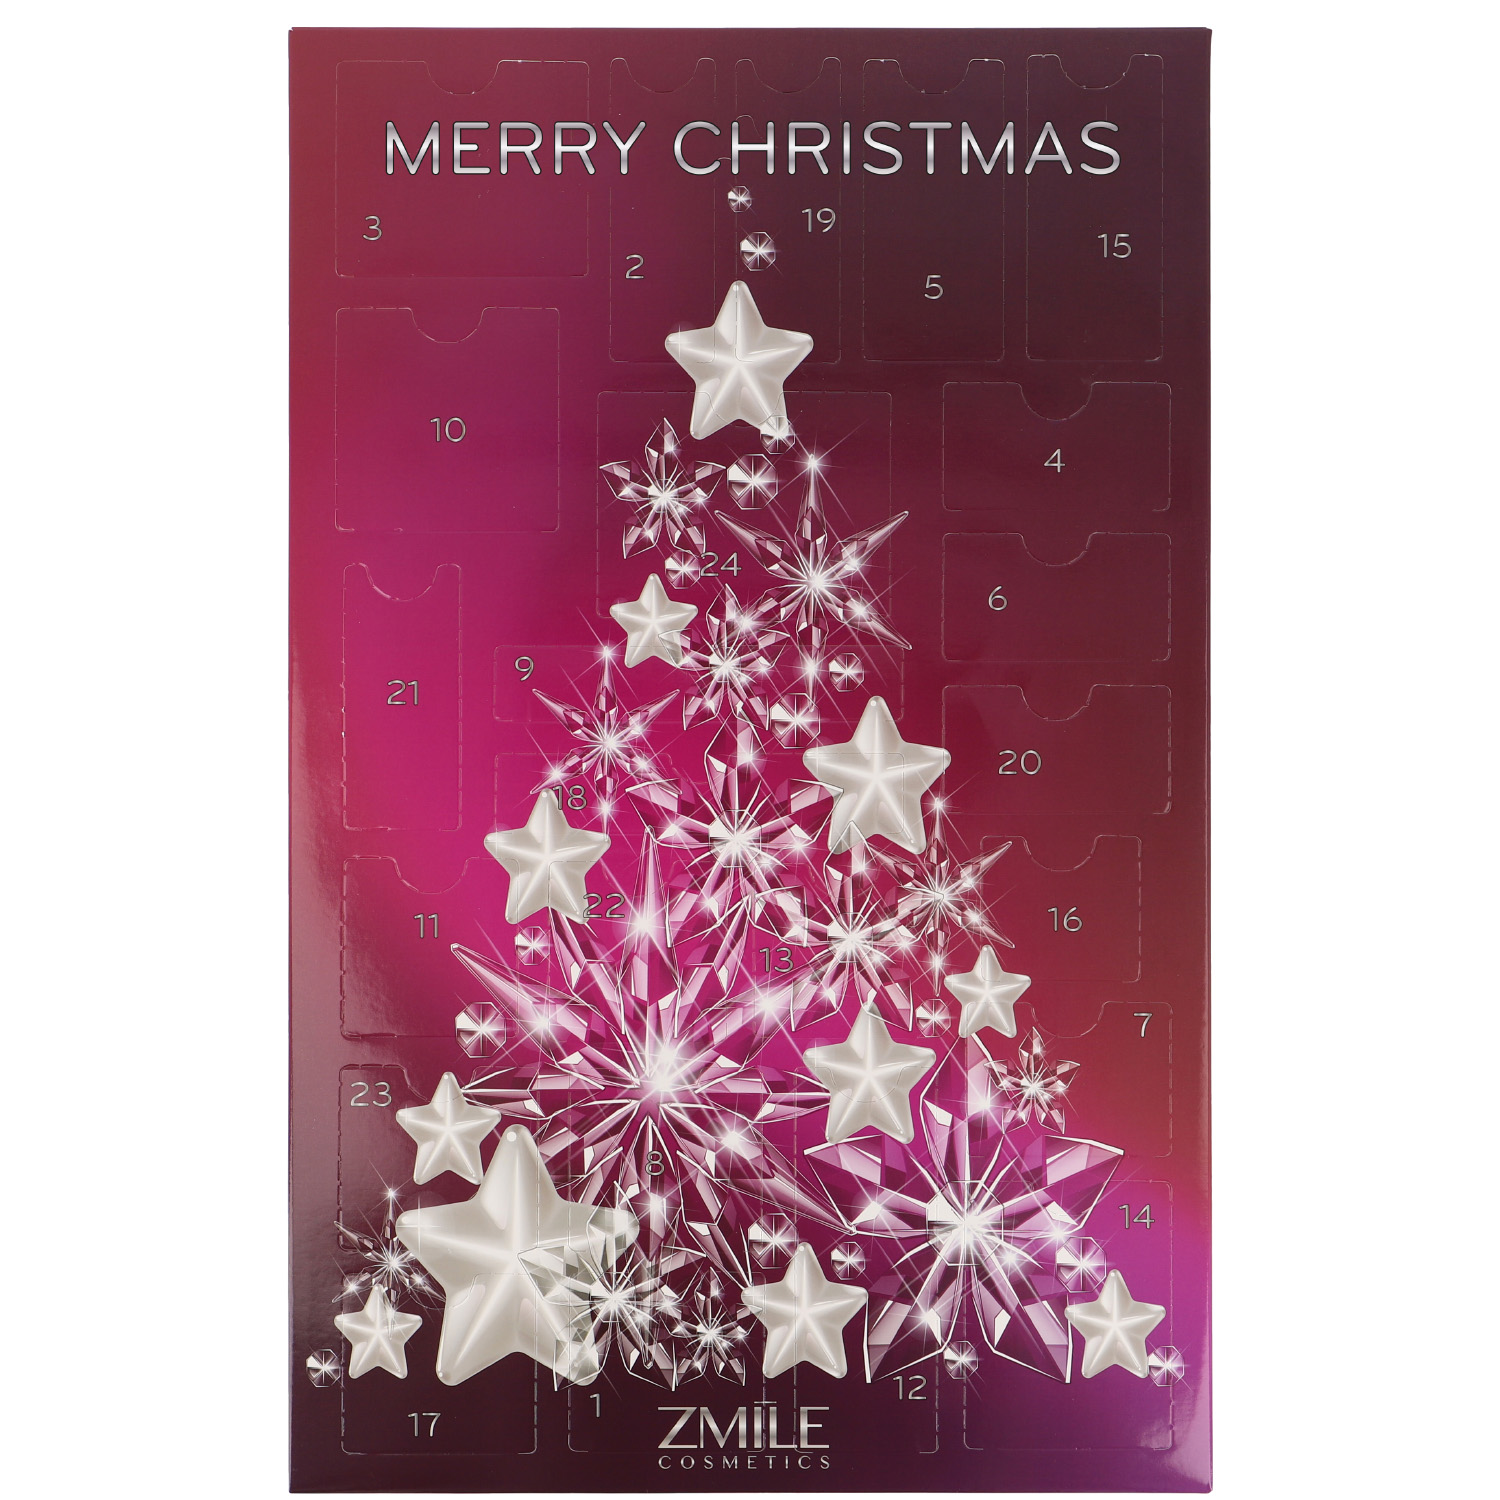 ZMILE Cosmetics Adventskalender "Crystal Christmas Tree" gefüllt mit verschiedener Kosmetika & Accessoires